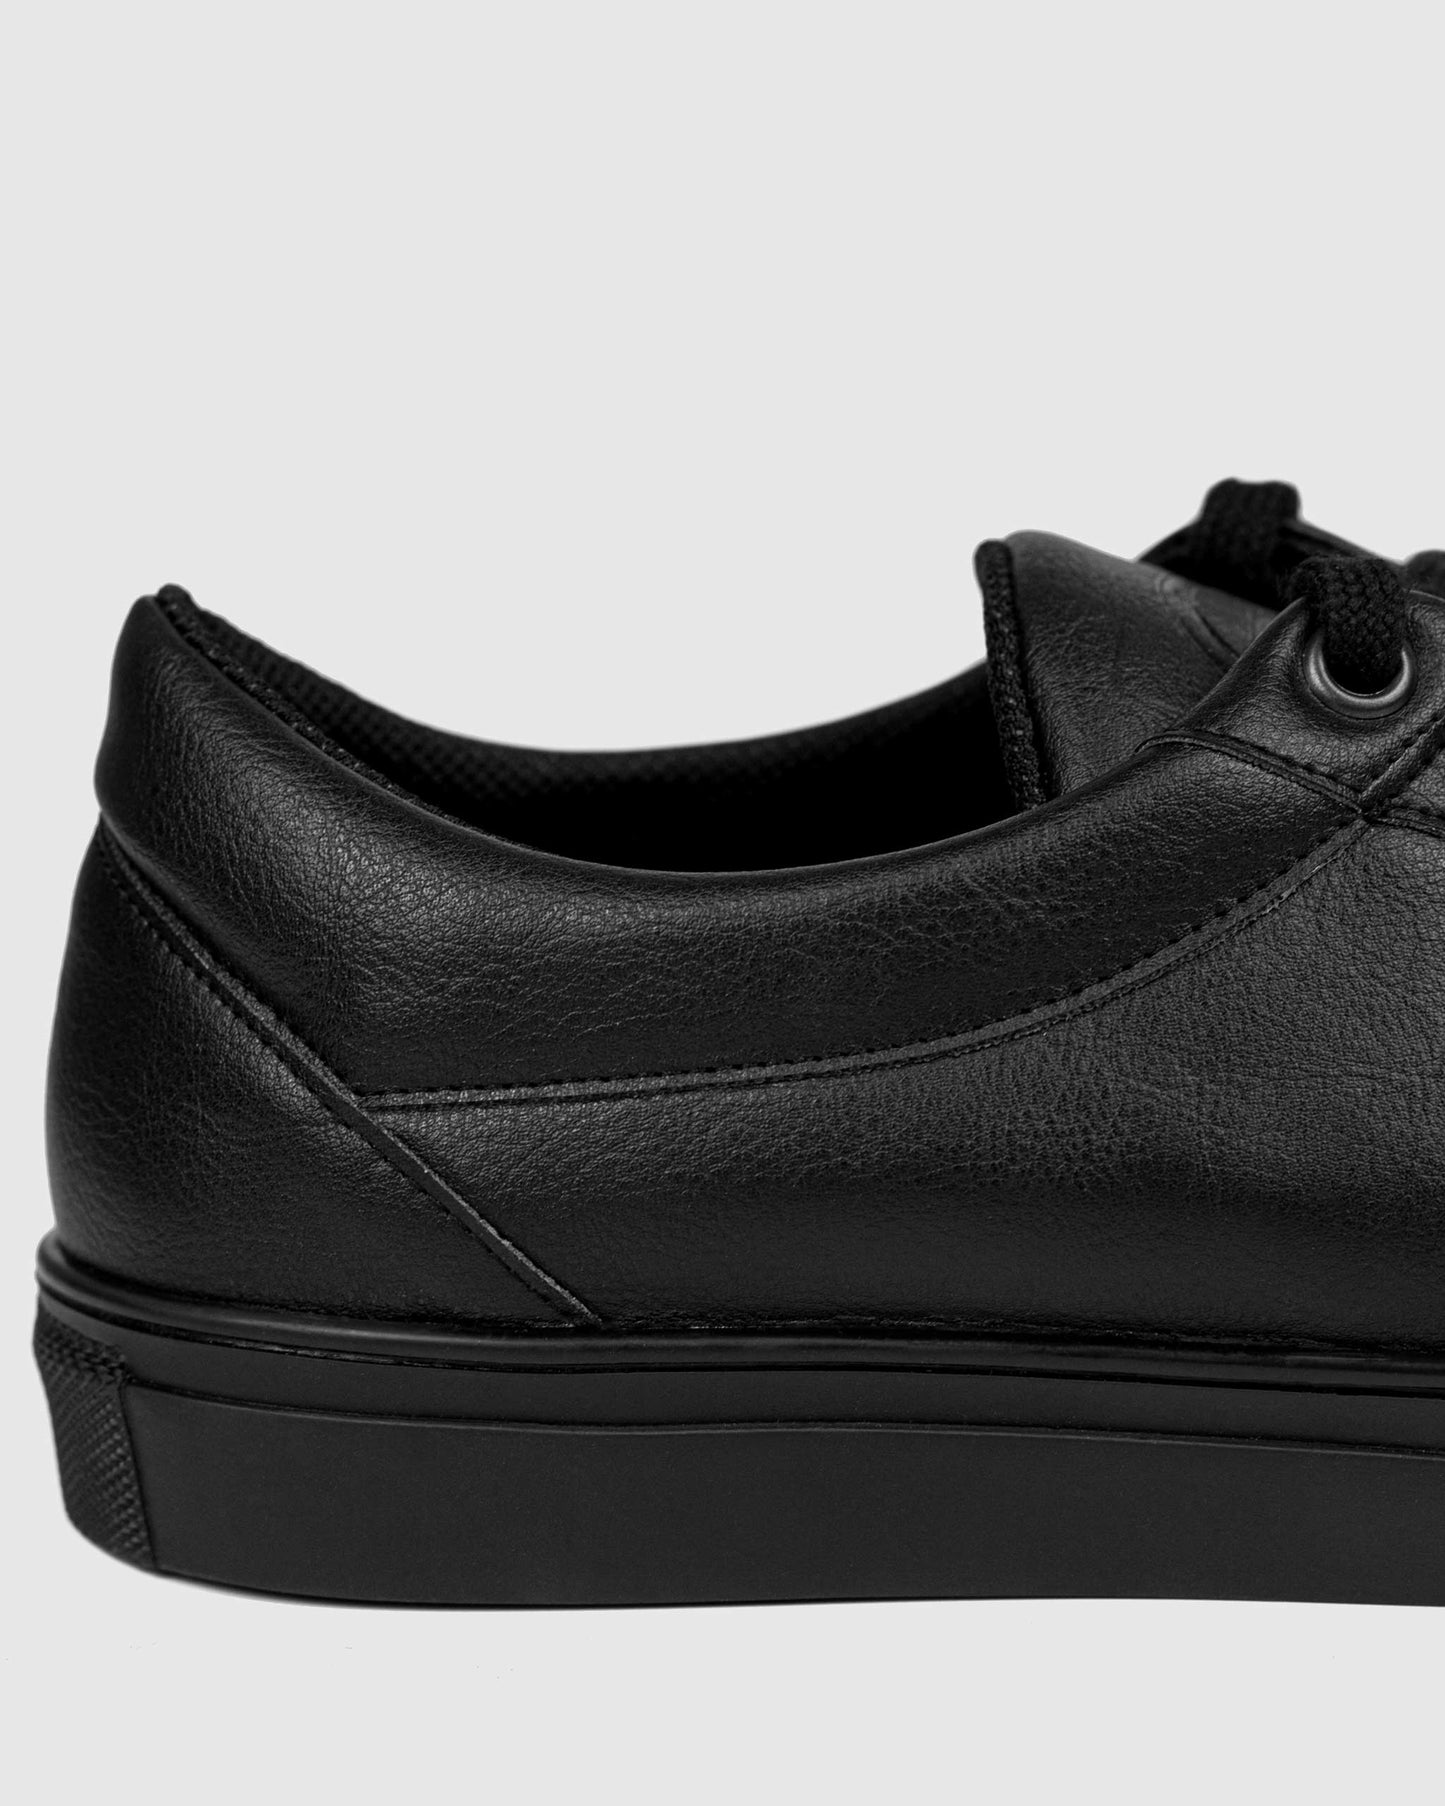 Sneakers Awake Black sneakers made of Vegea grape leather